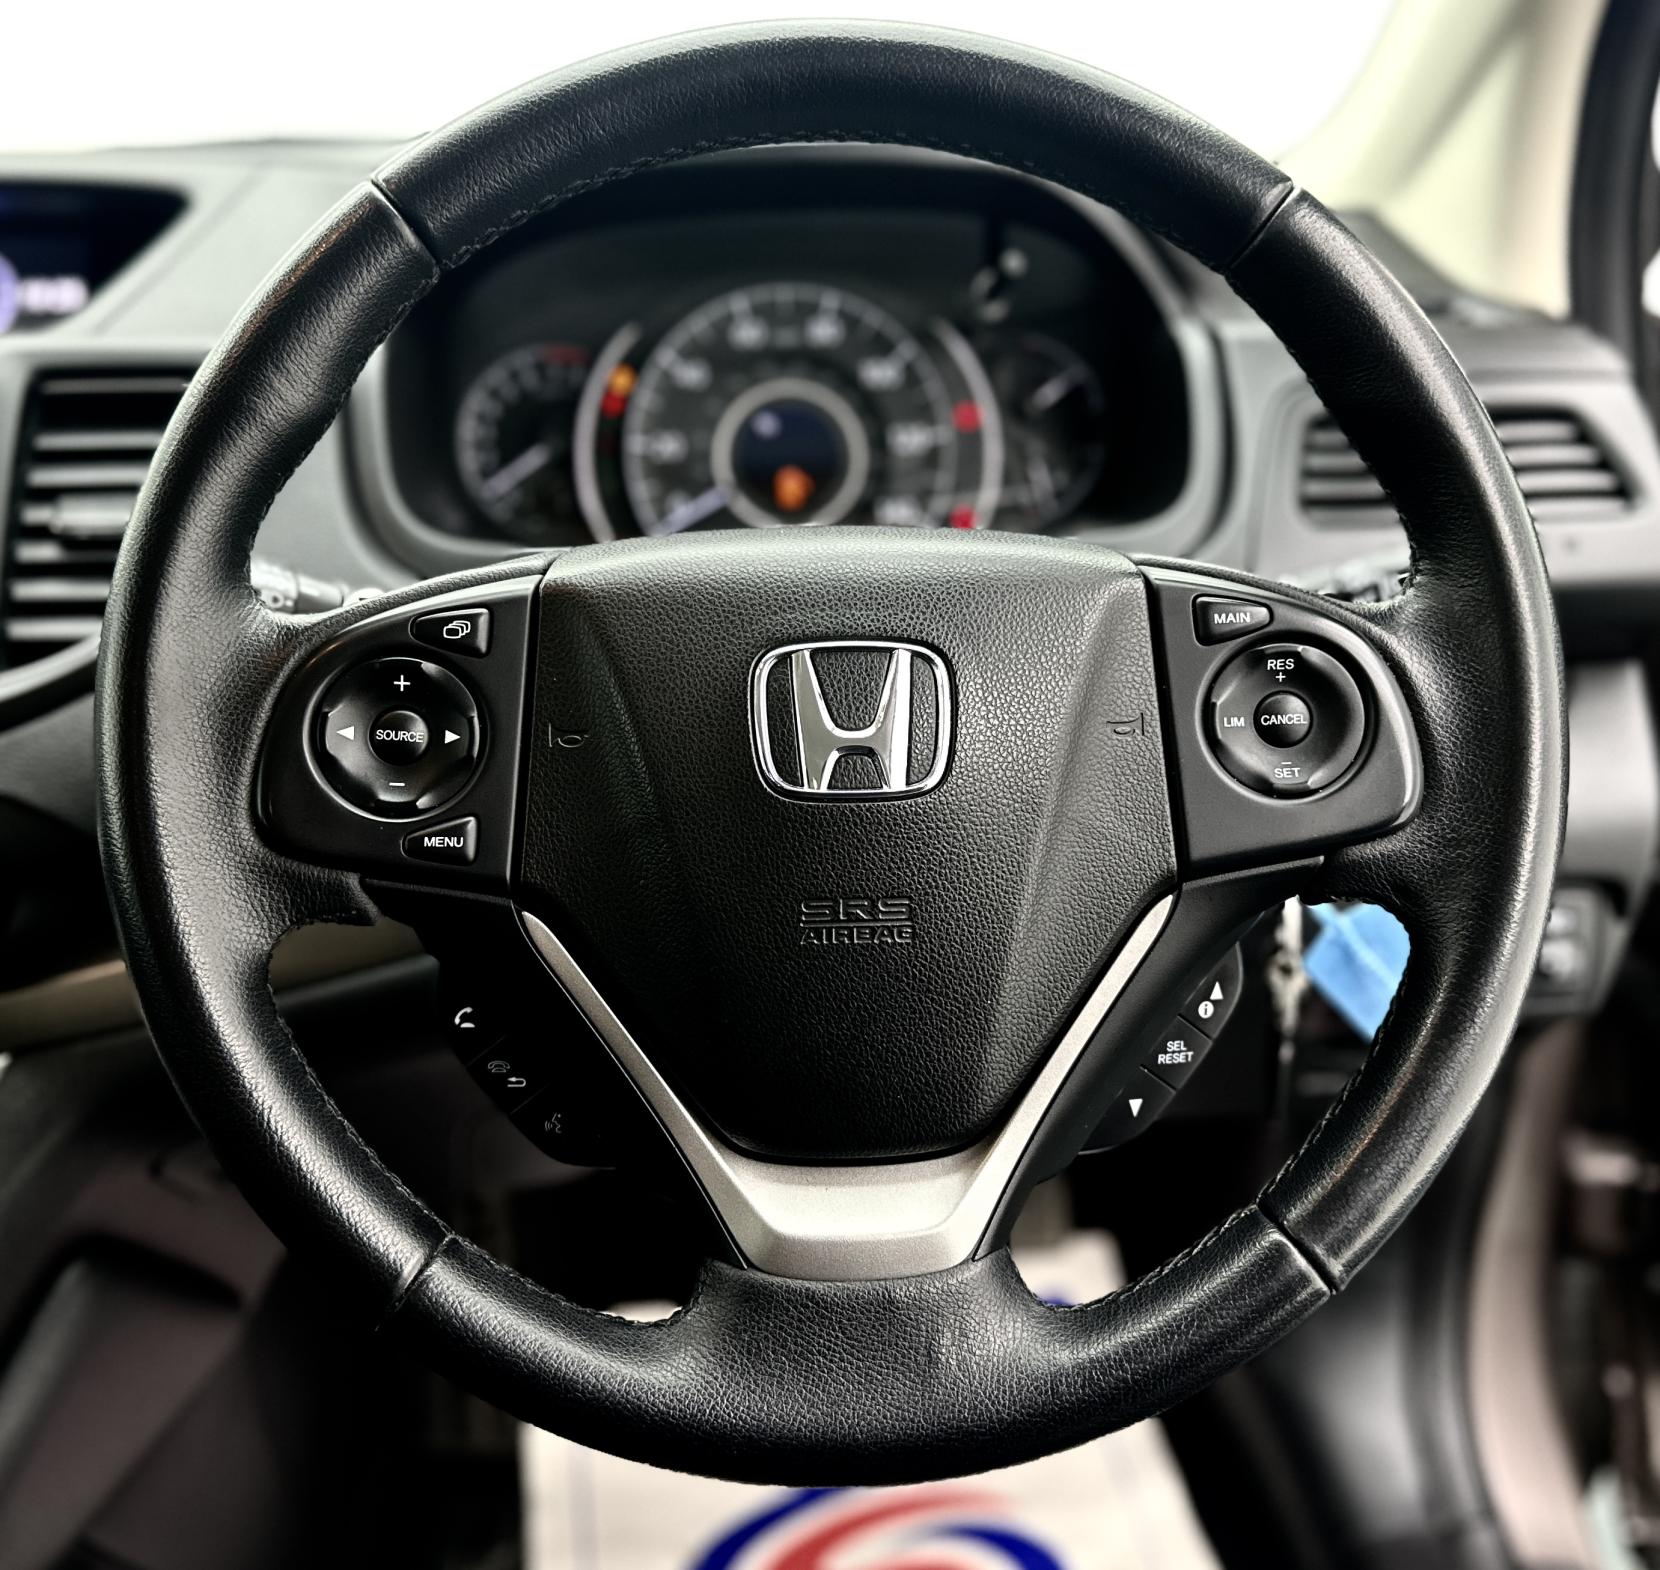 Honda CR-V 2.0 i-VTEC SE Auto 4WD Euro 5 5dr